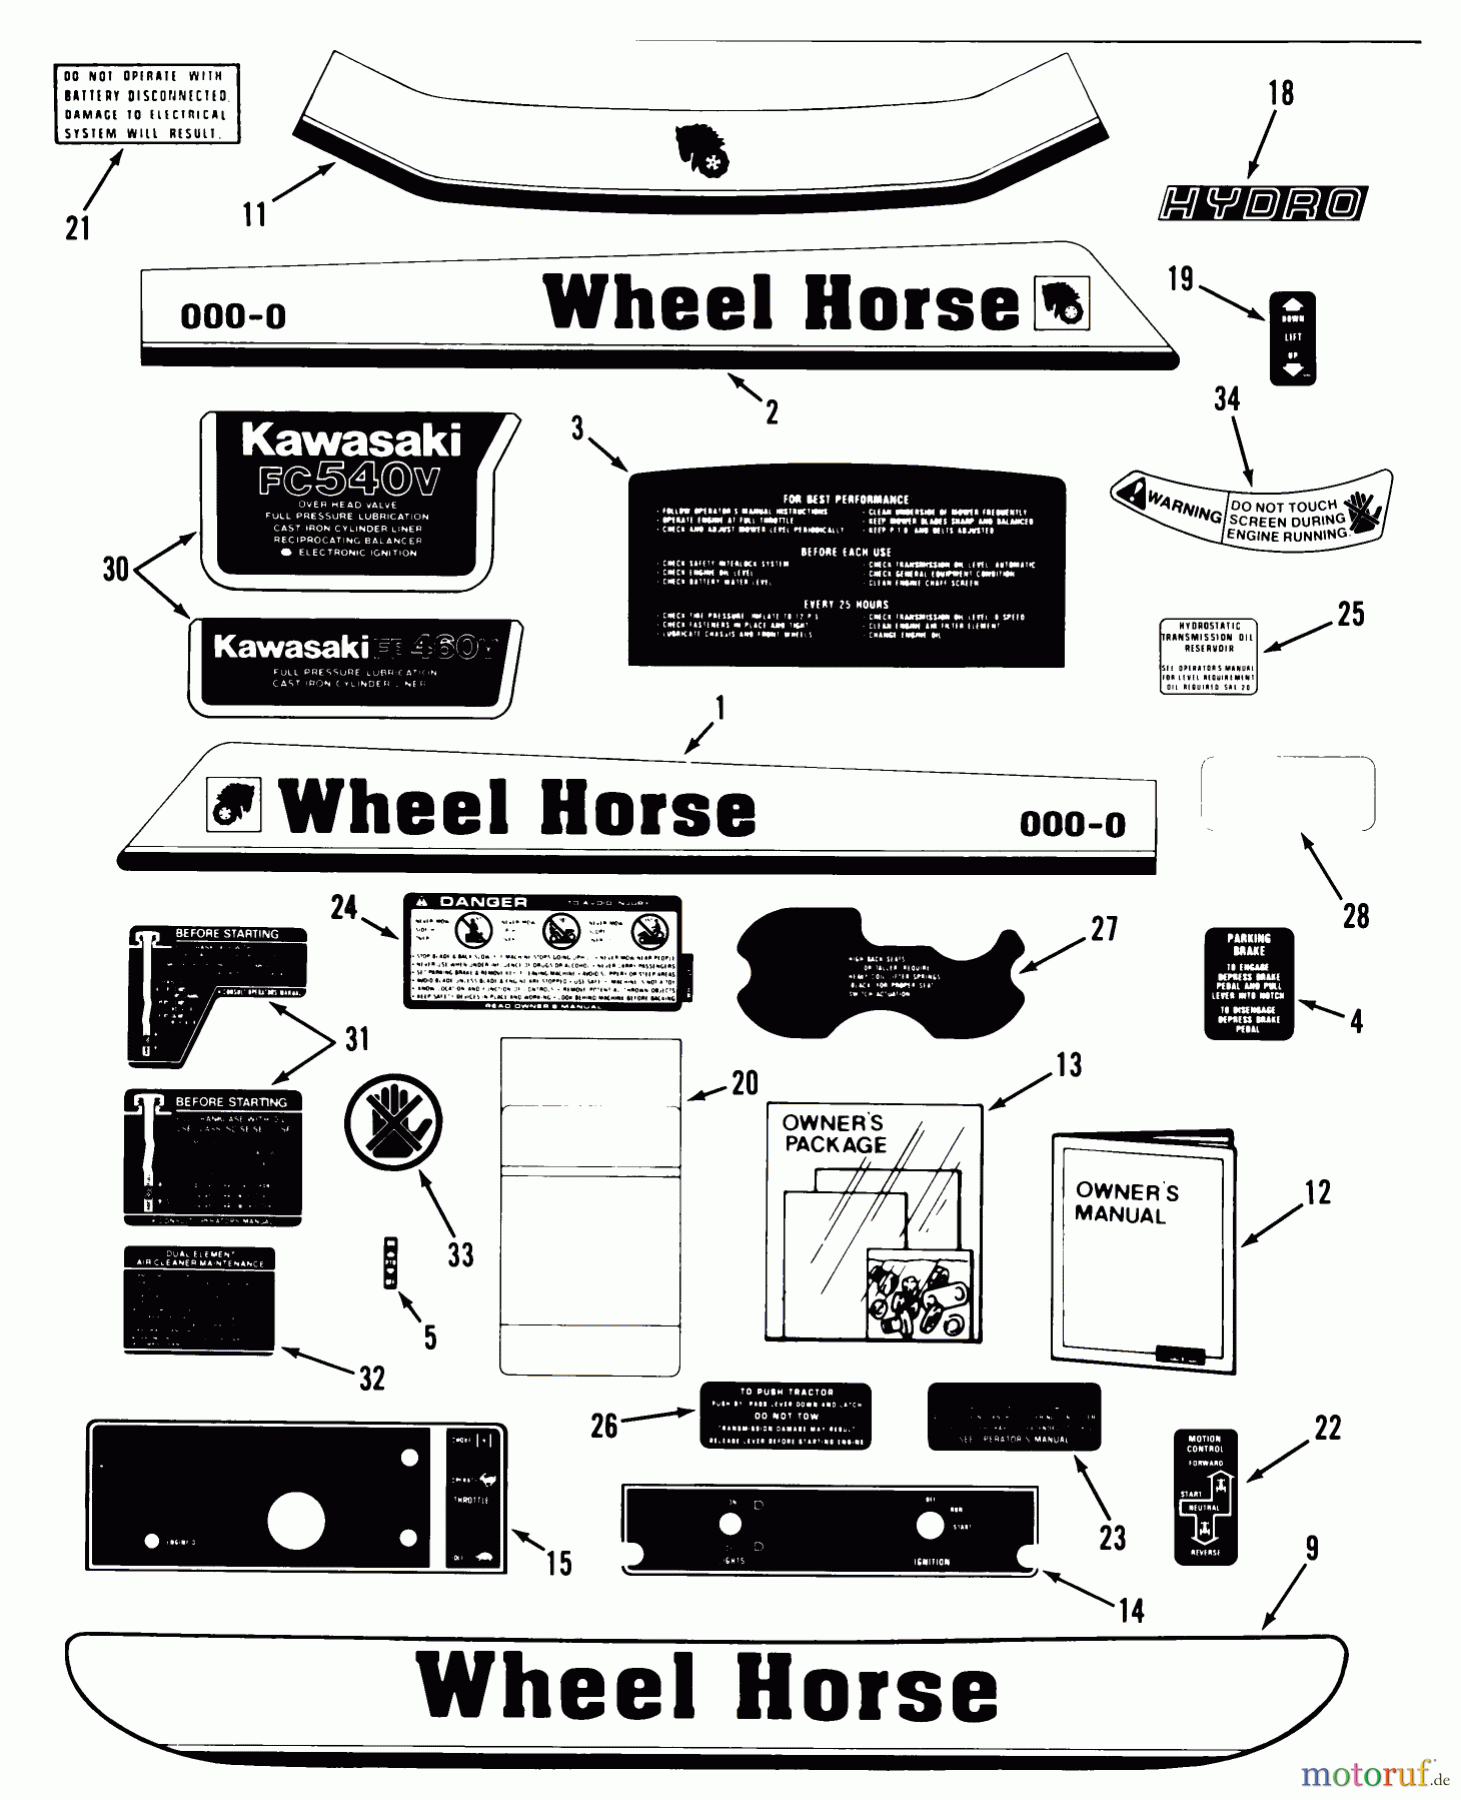  Toro Neu Mowers, Lawn & Garden Tractor Seite 1 22-13KE02 (252-H) - Toro 252-H Tractor, 1989 DECALS, MISCELLANEOUS